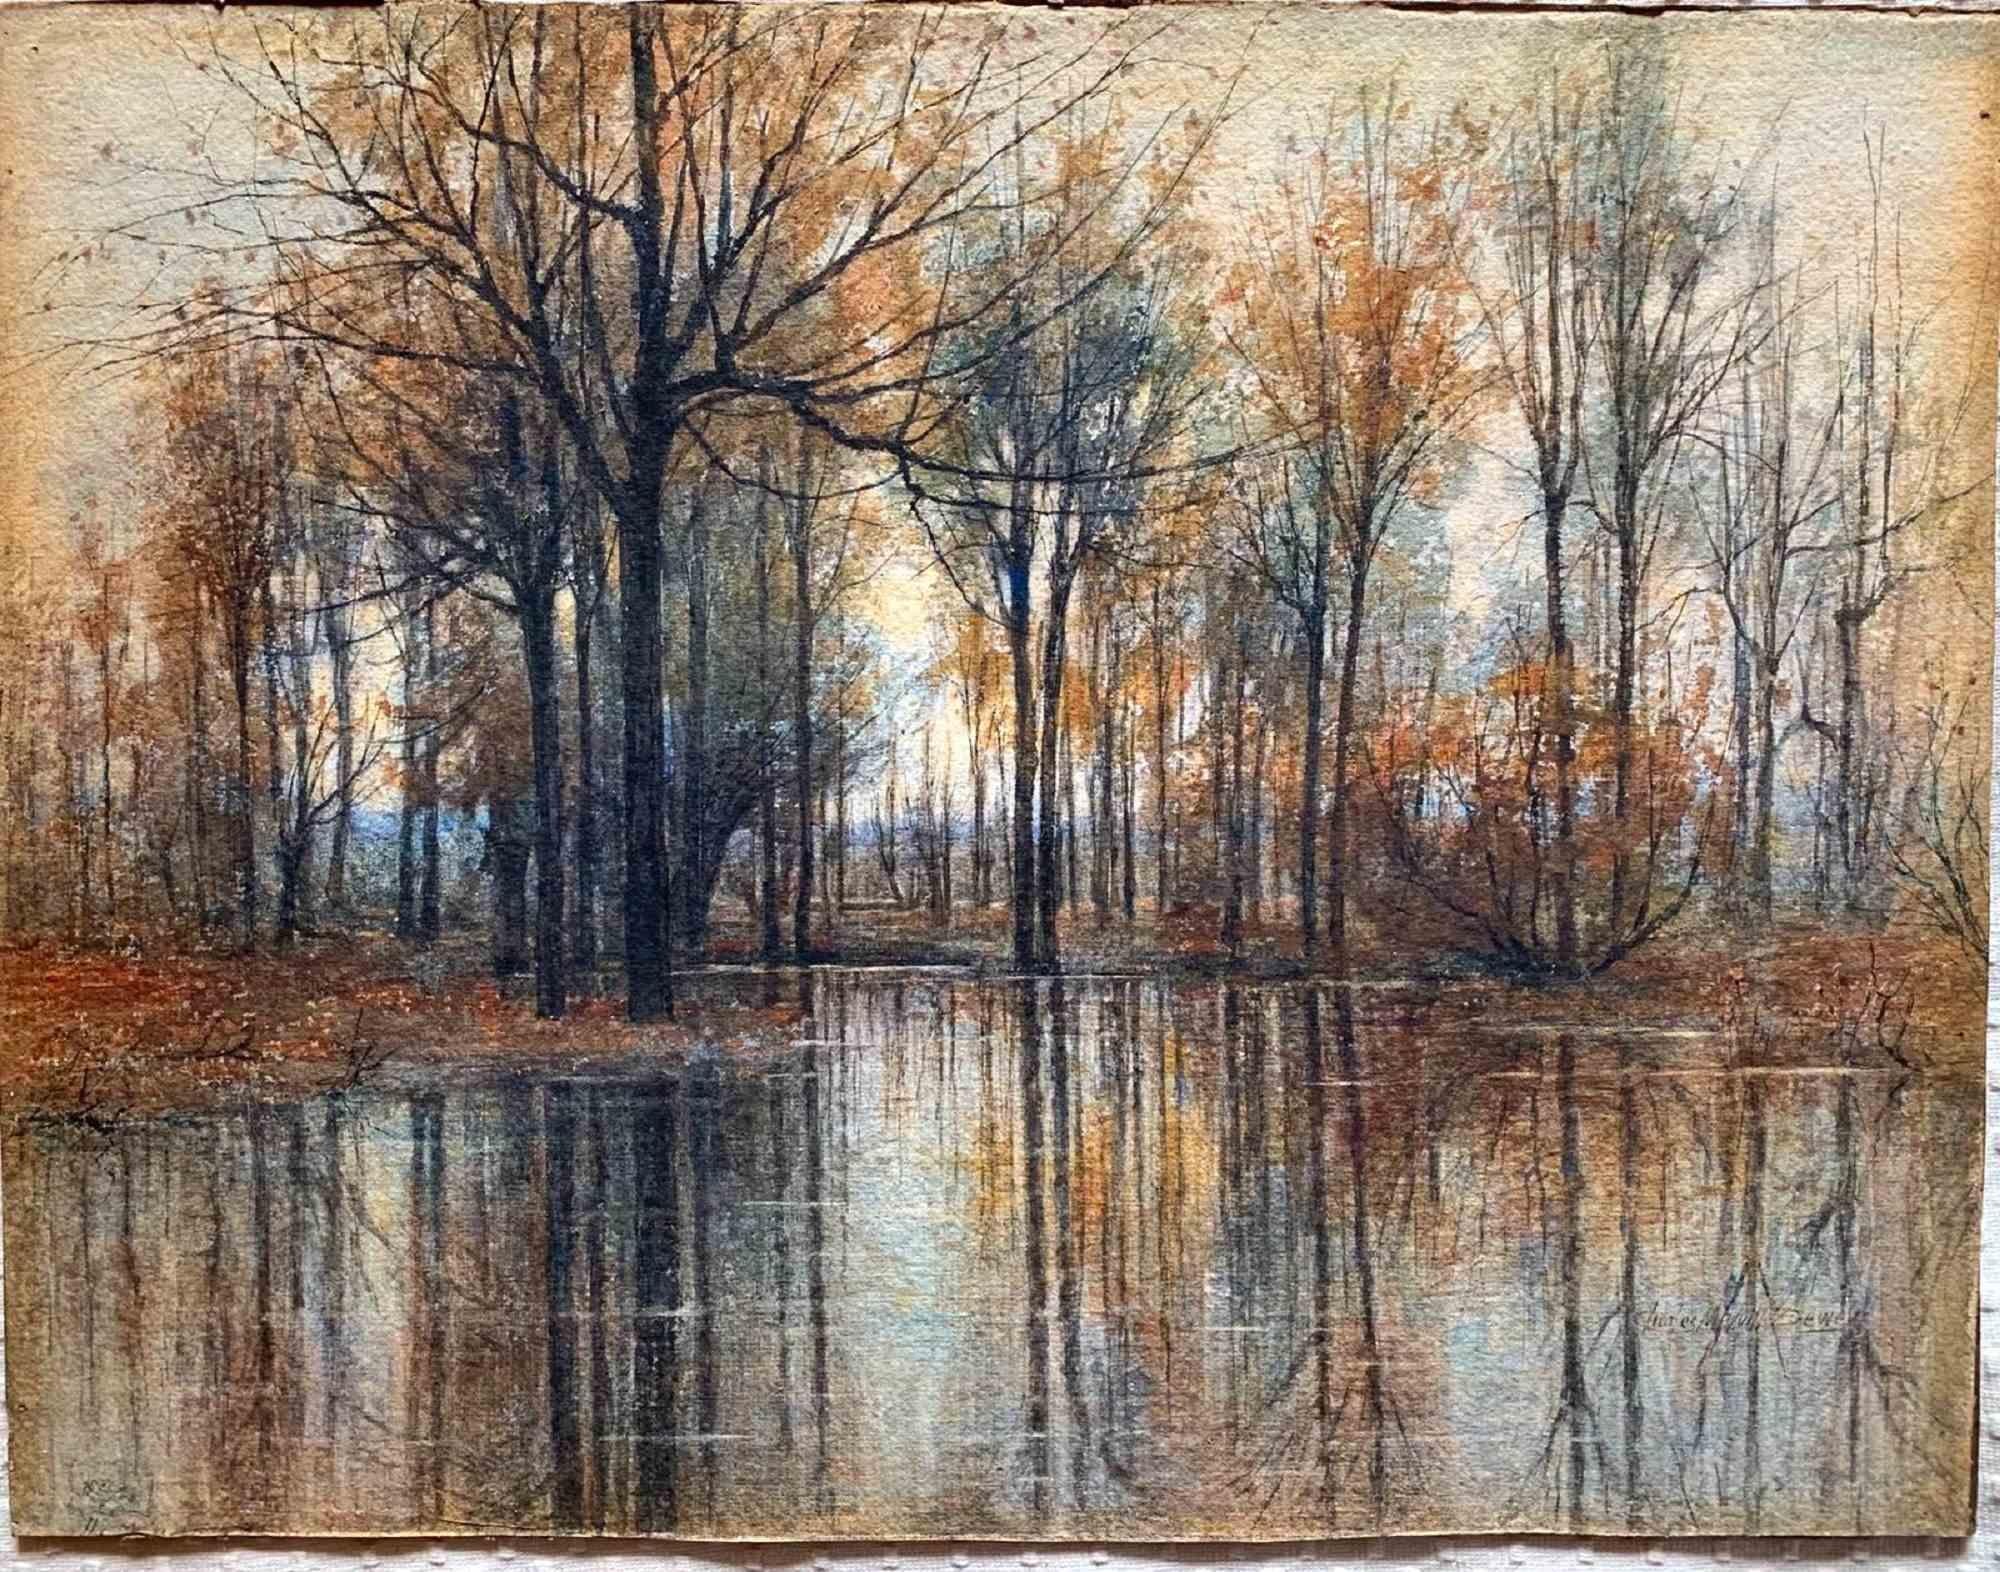 The Mirror of the Woods-Painting von Charles Melville Dewey, 20. Jahrhundert